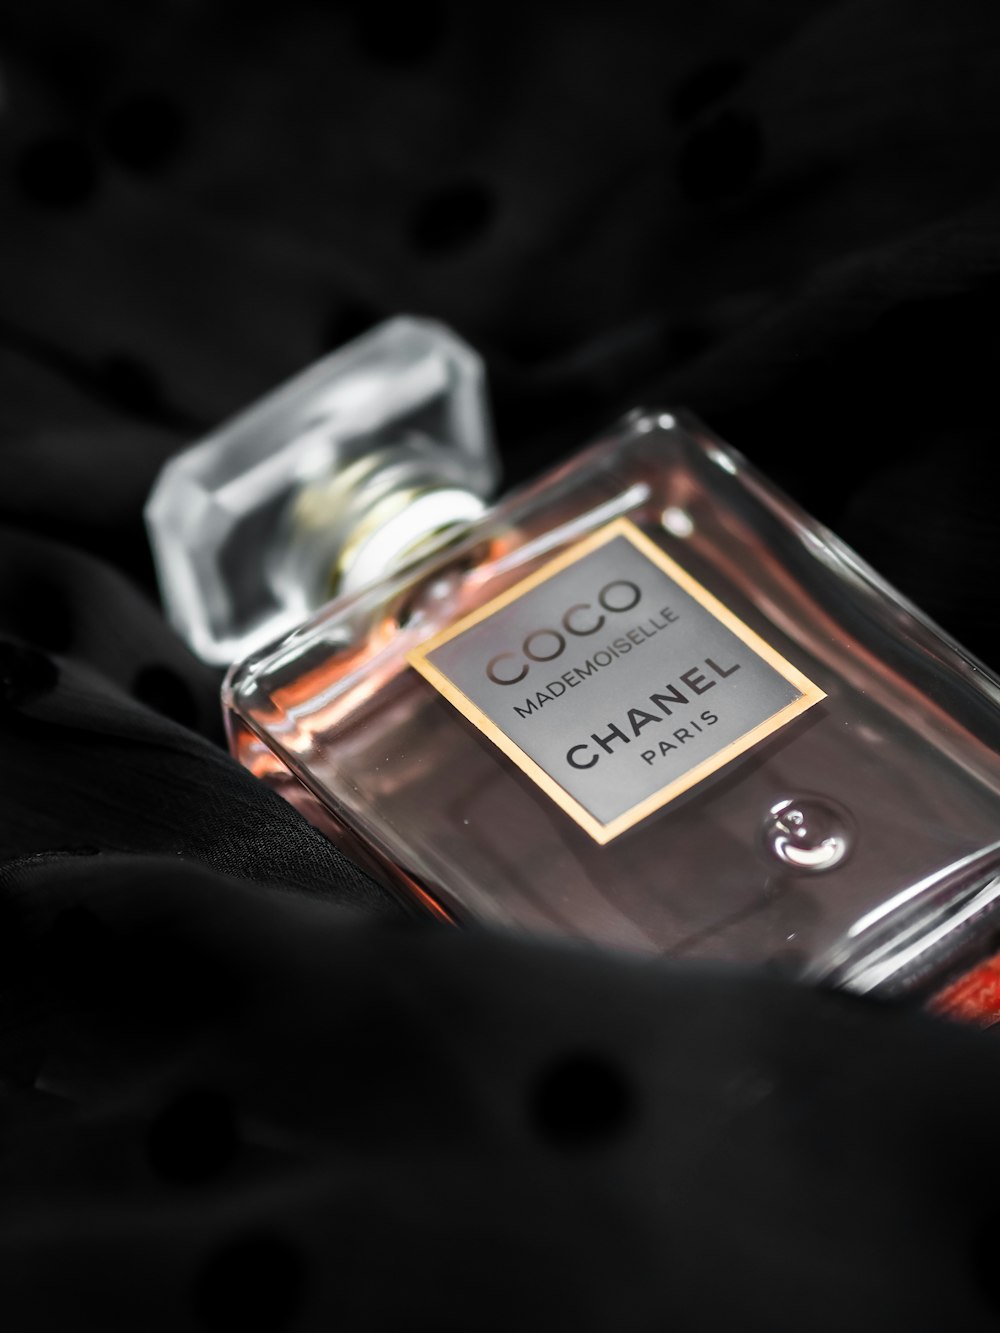 50 ml perfume bottle on black textile